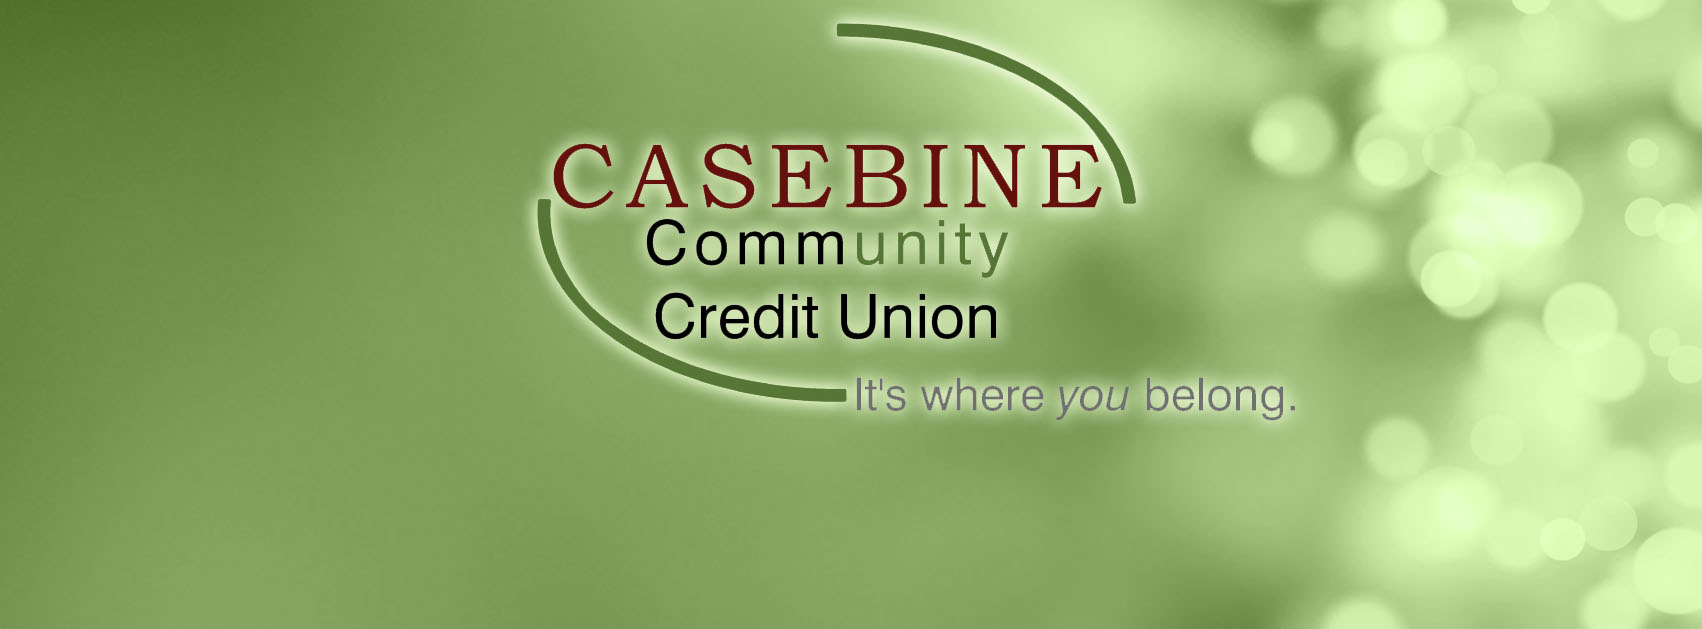 Casebine Community Credit Union